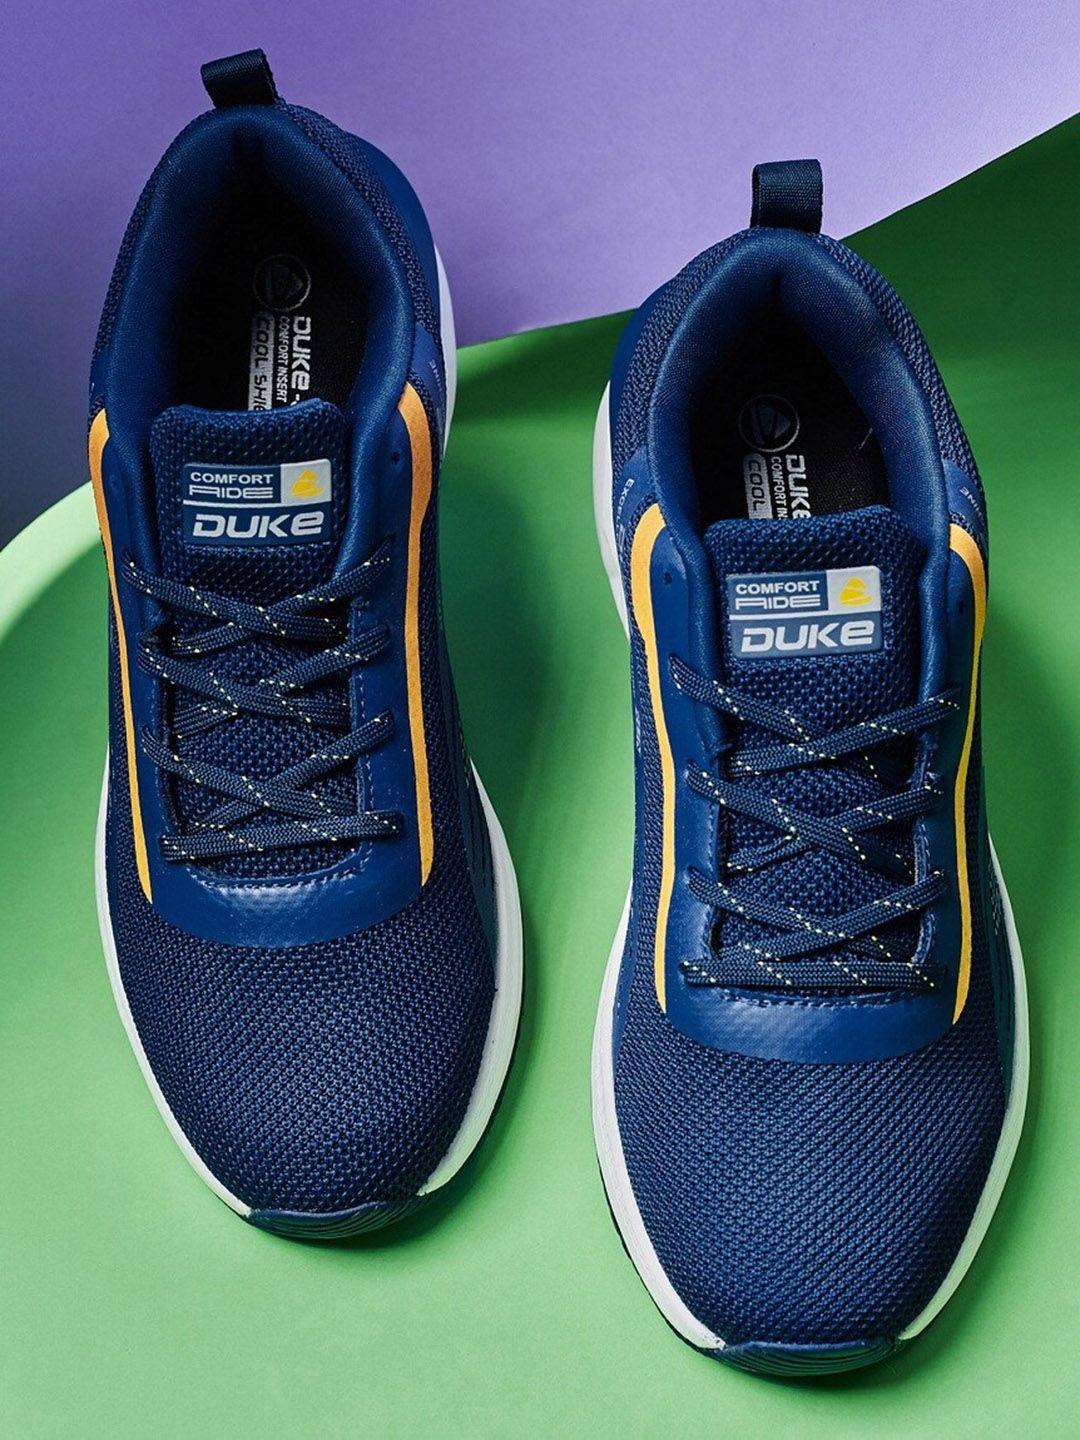 duke-men-lace-ups-textile-training-or-gym-sports-shoes